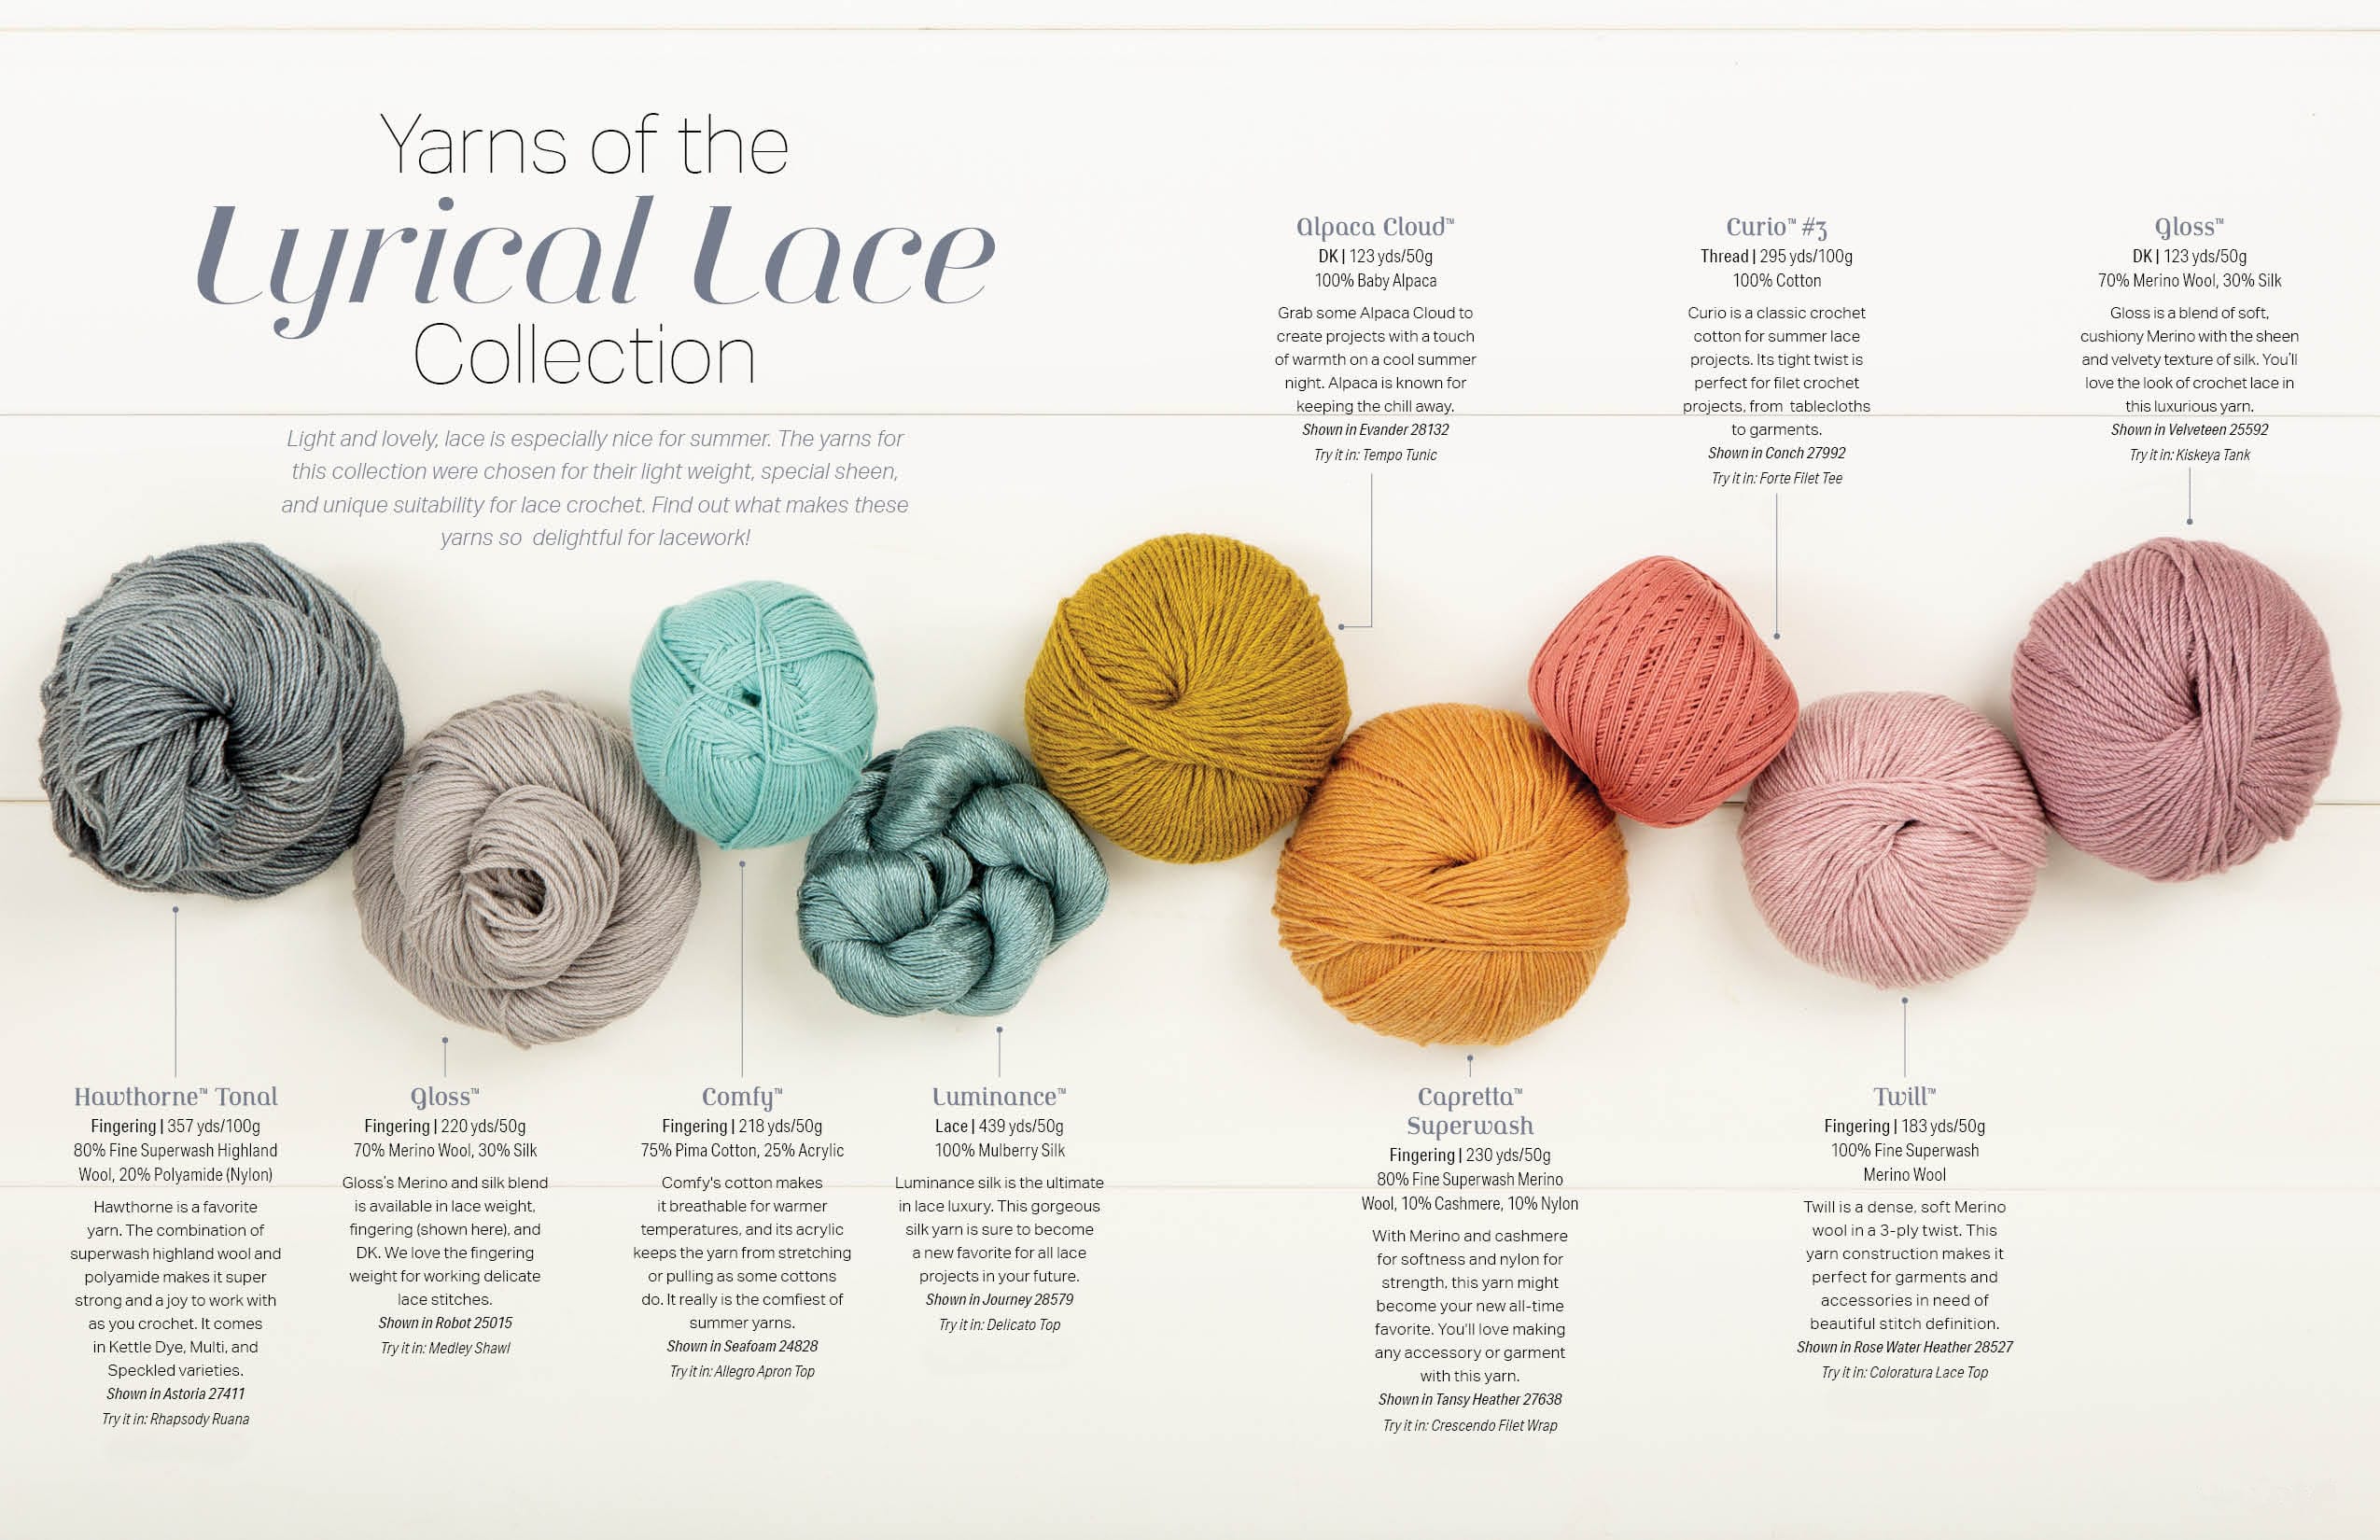 Those who crochet fingering weight yarn: why? : r/crochet